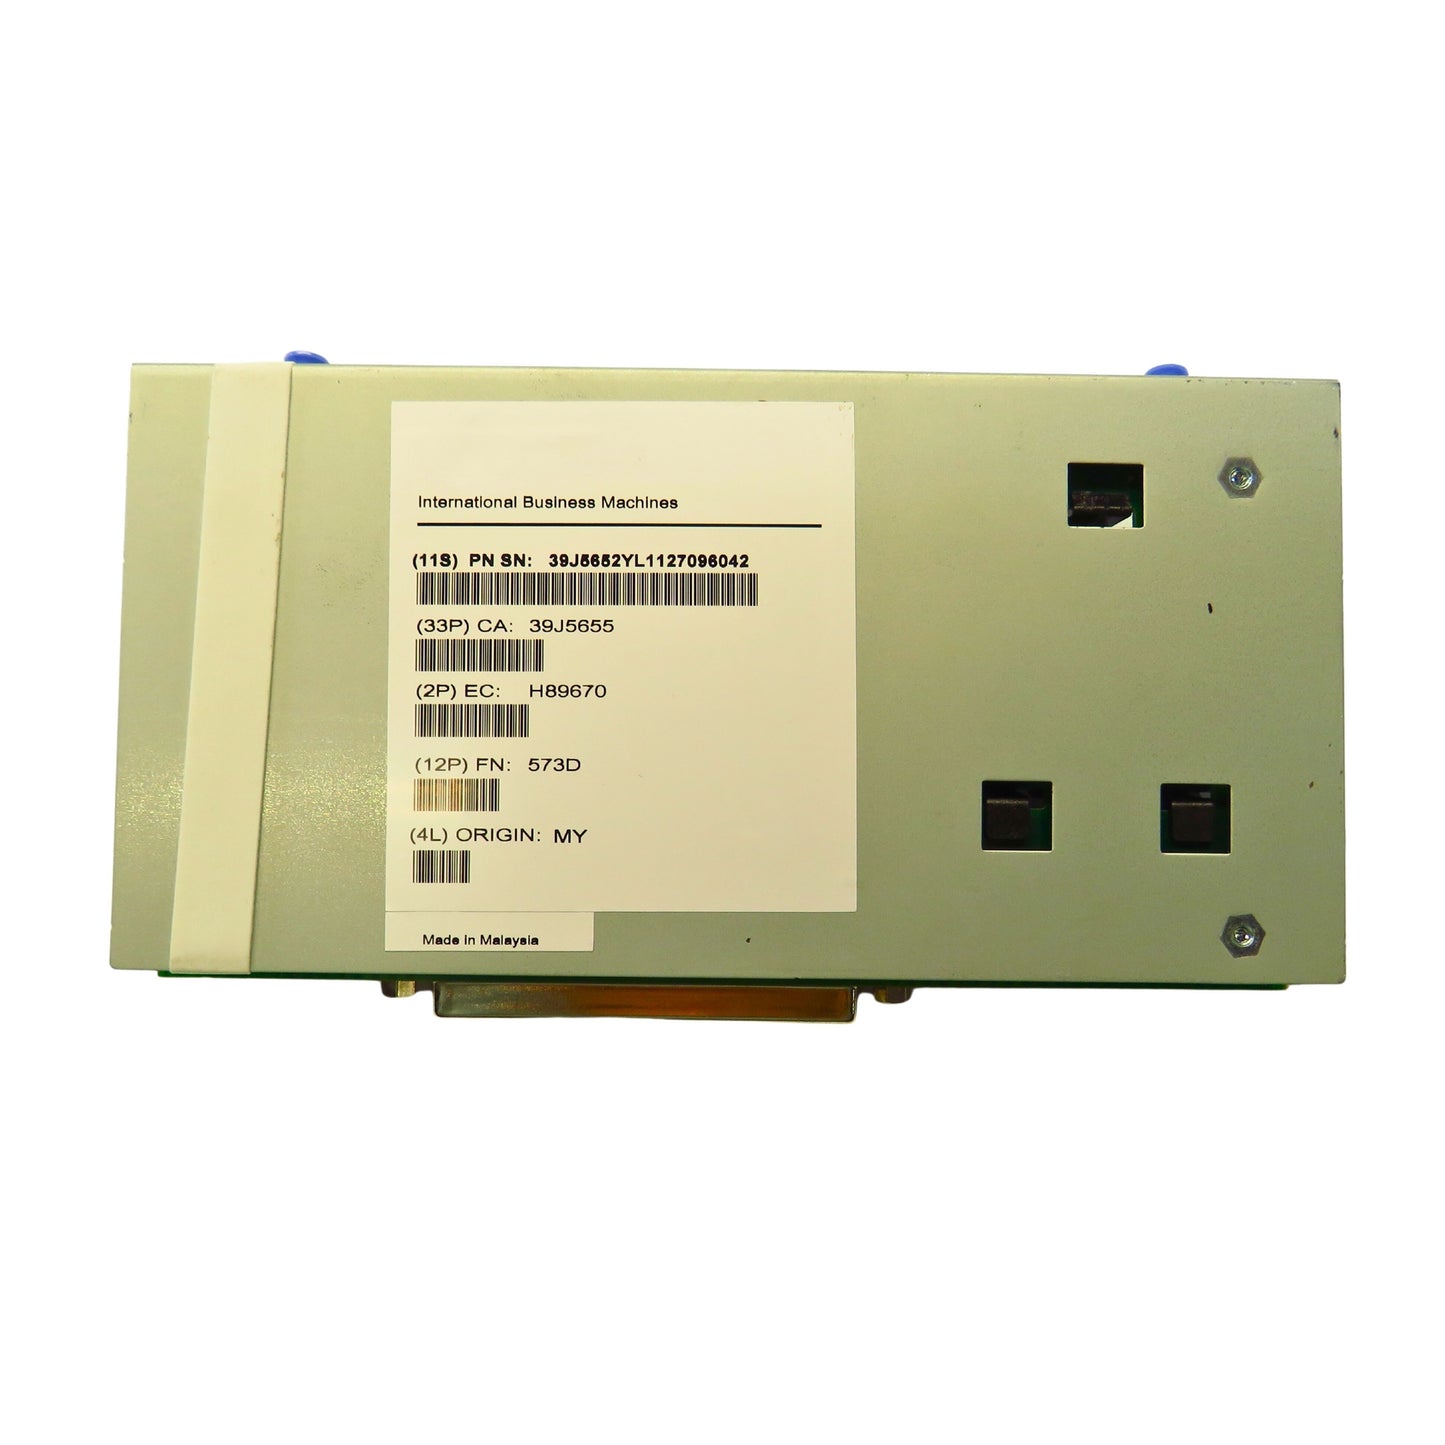 IBM 39J5655 573D Dual Channel SCSI RAID Enablement Card (Refurbished)